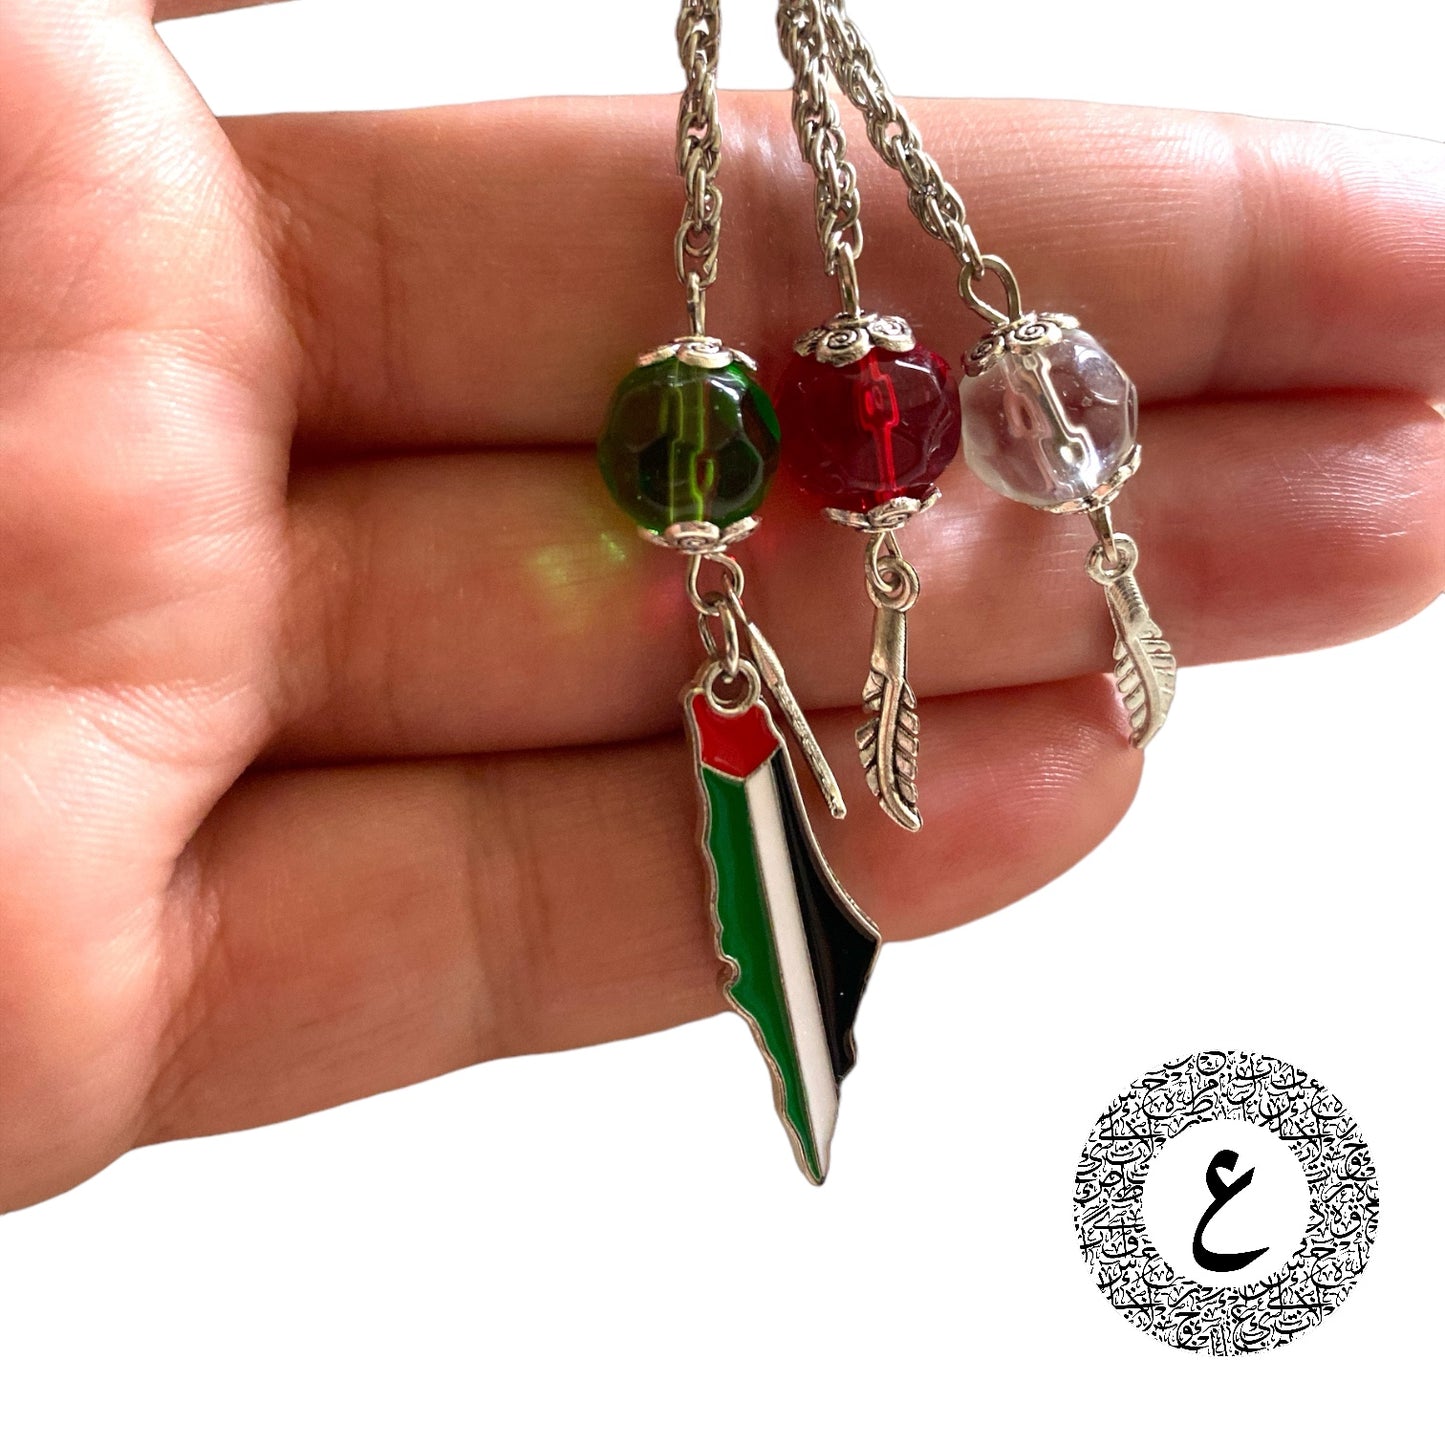 Palestine Essence" – Exquisite Palestinian-Themed Crystal Prayer Beads